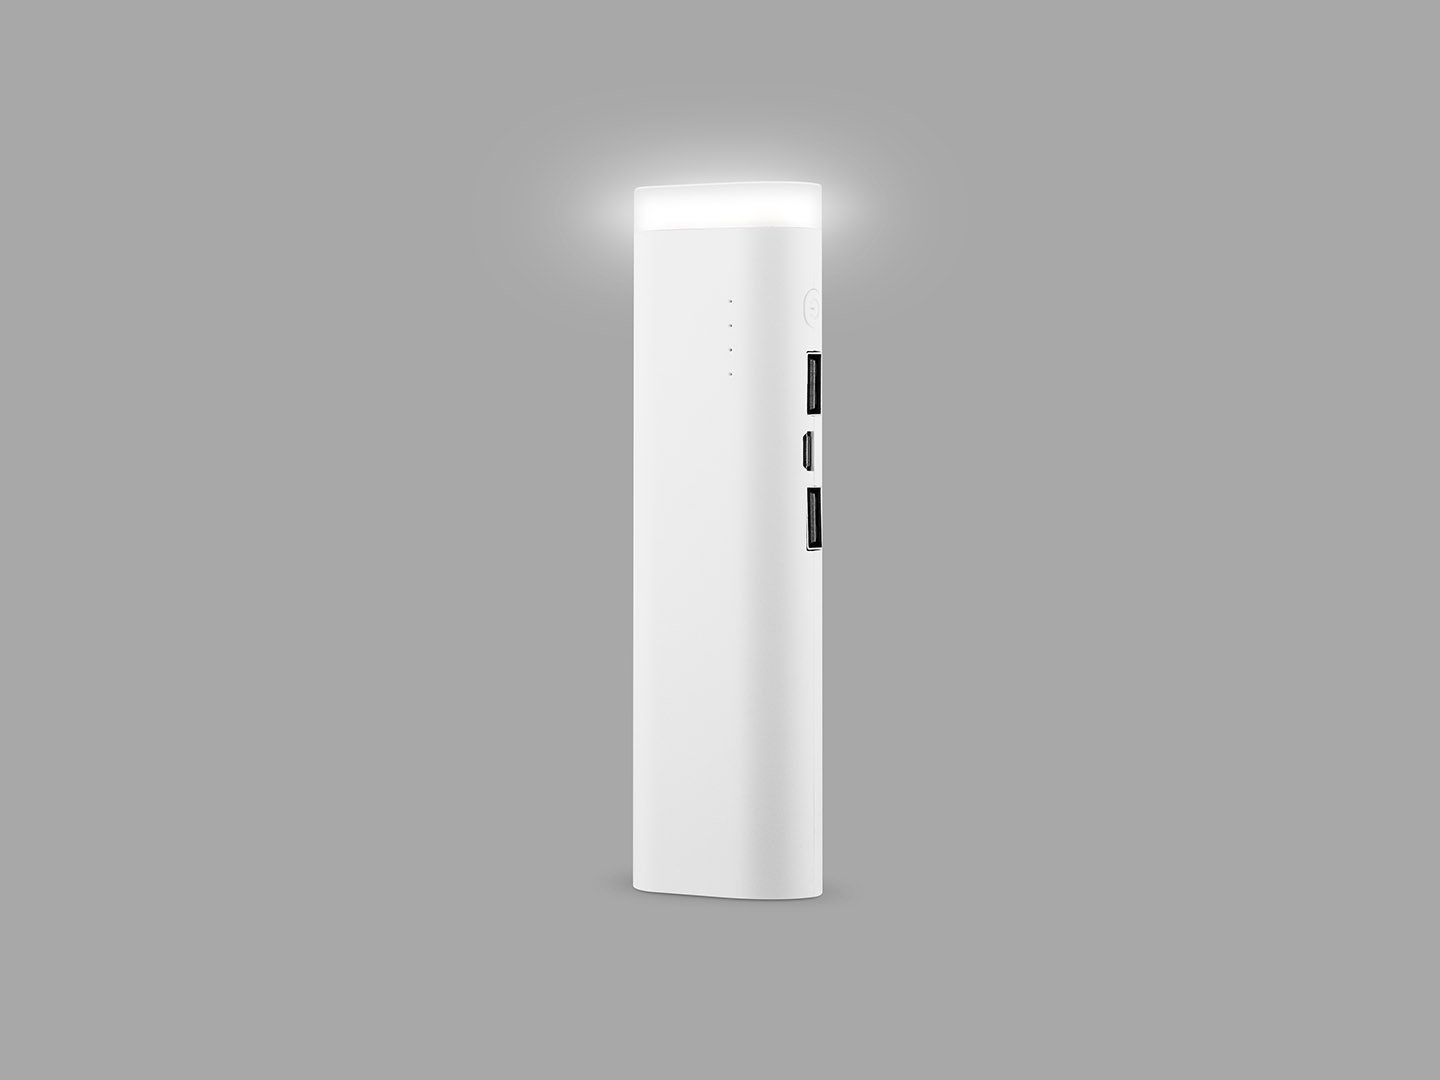 NEO NL90 Портативный аккумулятор
9 000 мАч • 2 USB • Мощный LED фонарь